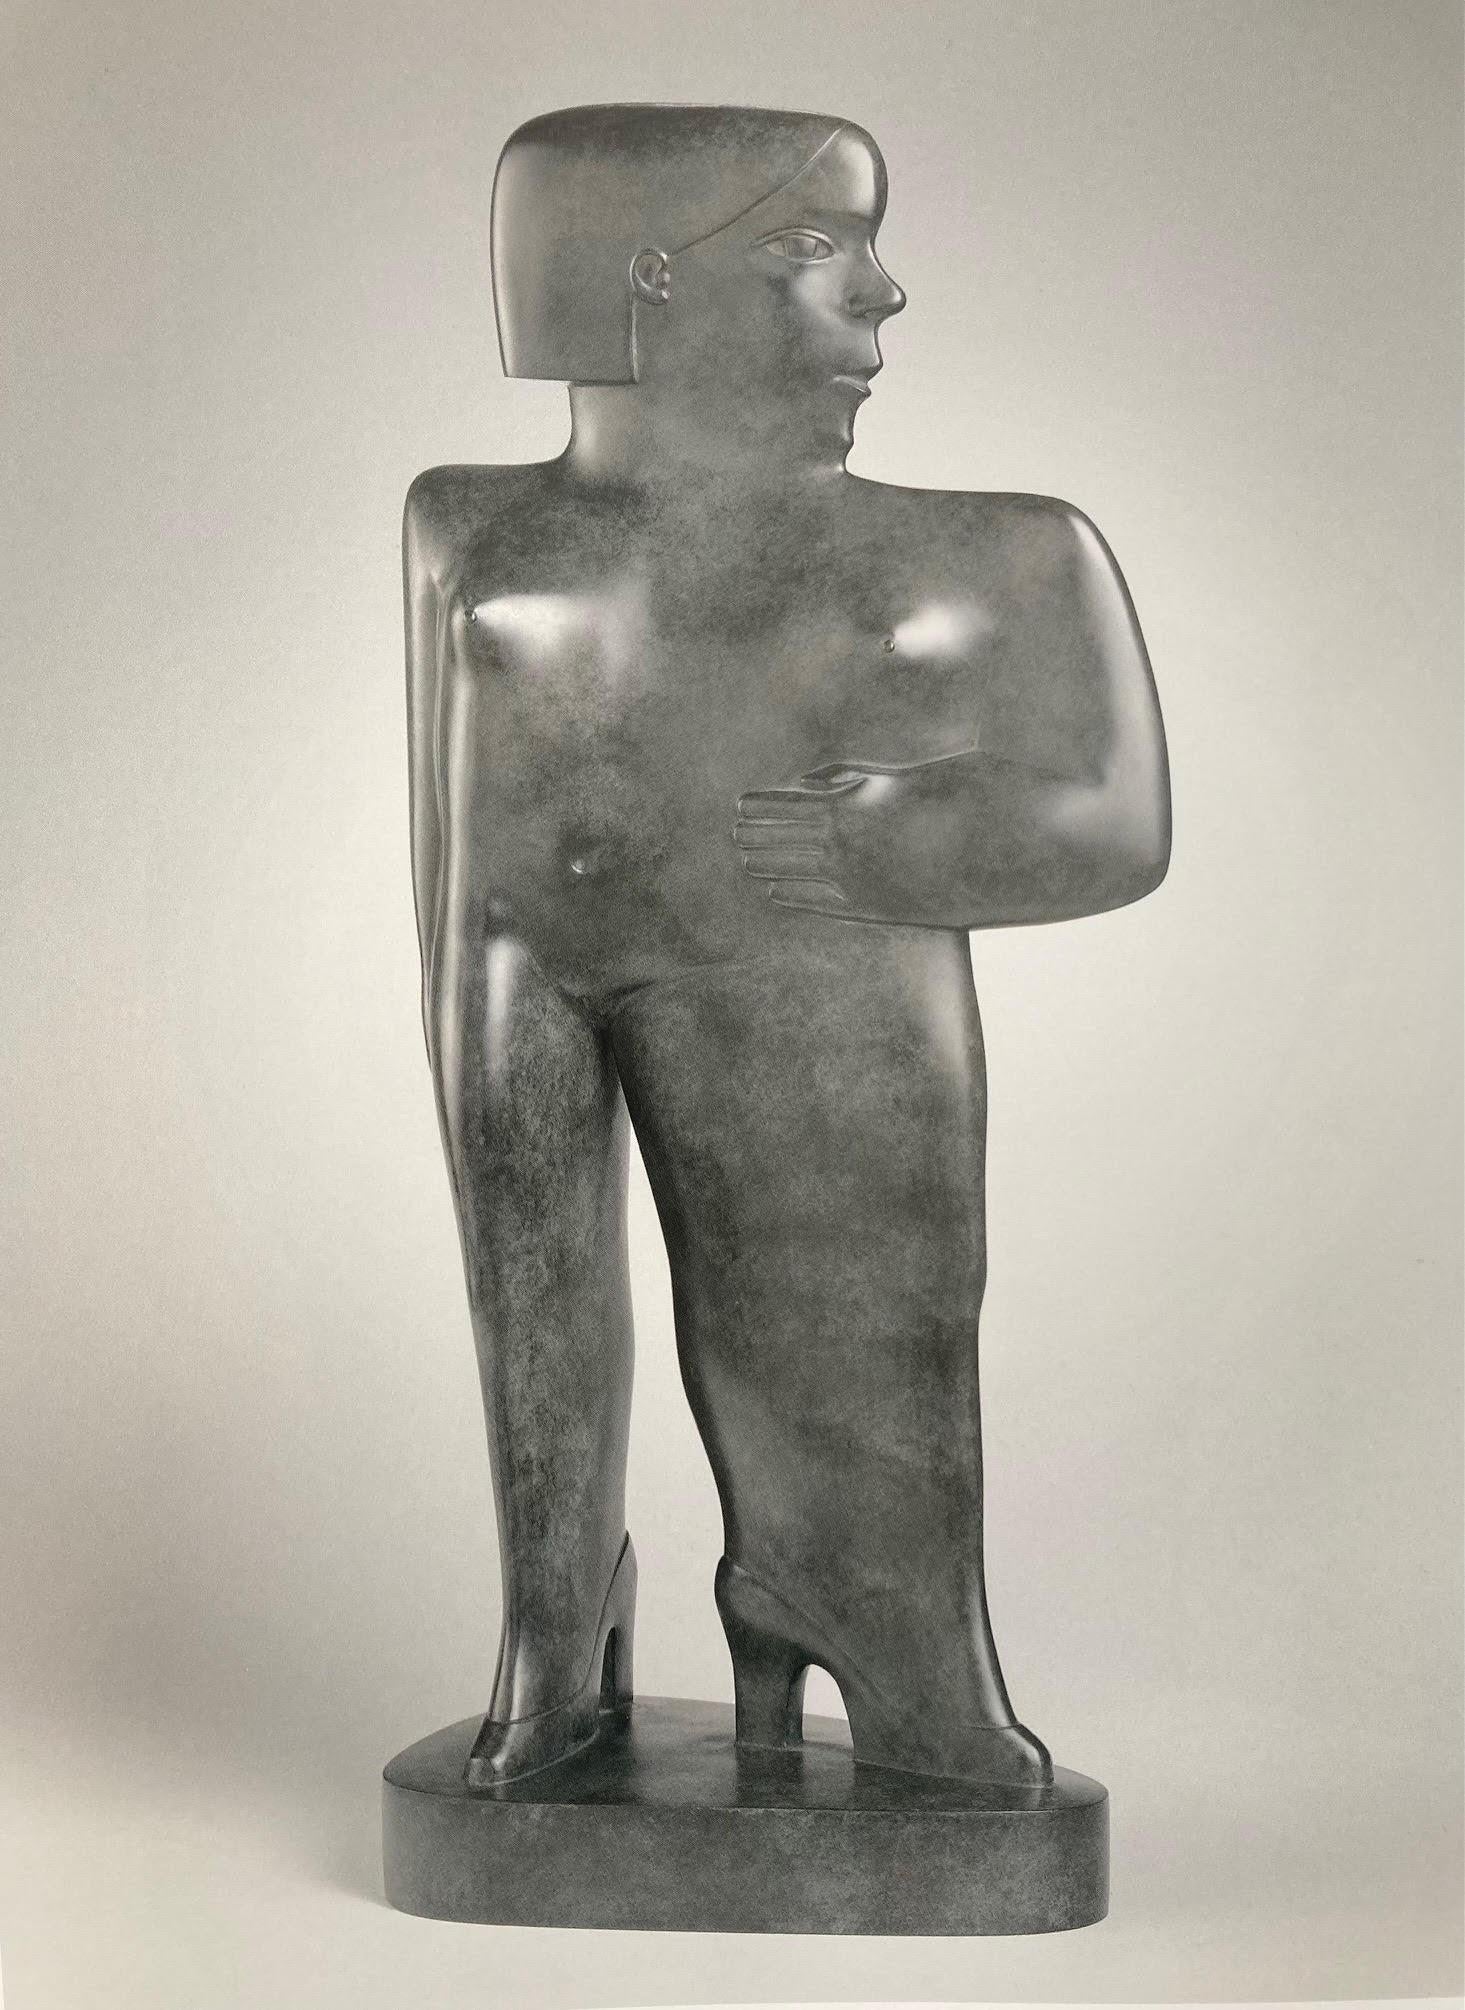 KOBE Figurative Sculpture - Hoge Hakken, Echte Liefde Bronze Sculpture High Heels Real Love Female Figure